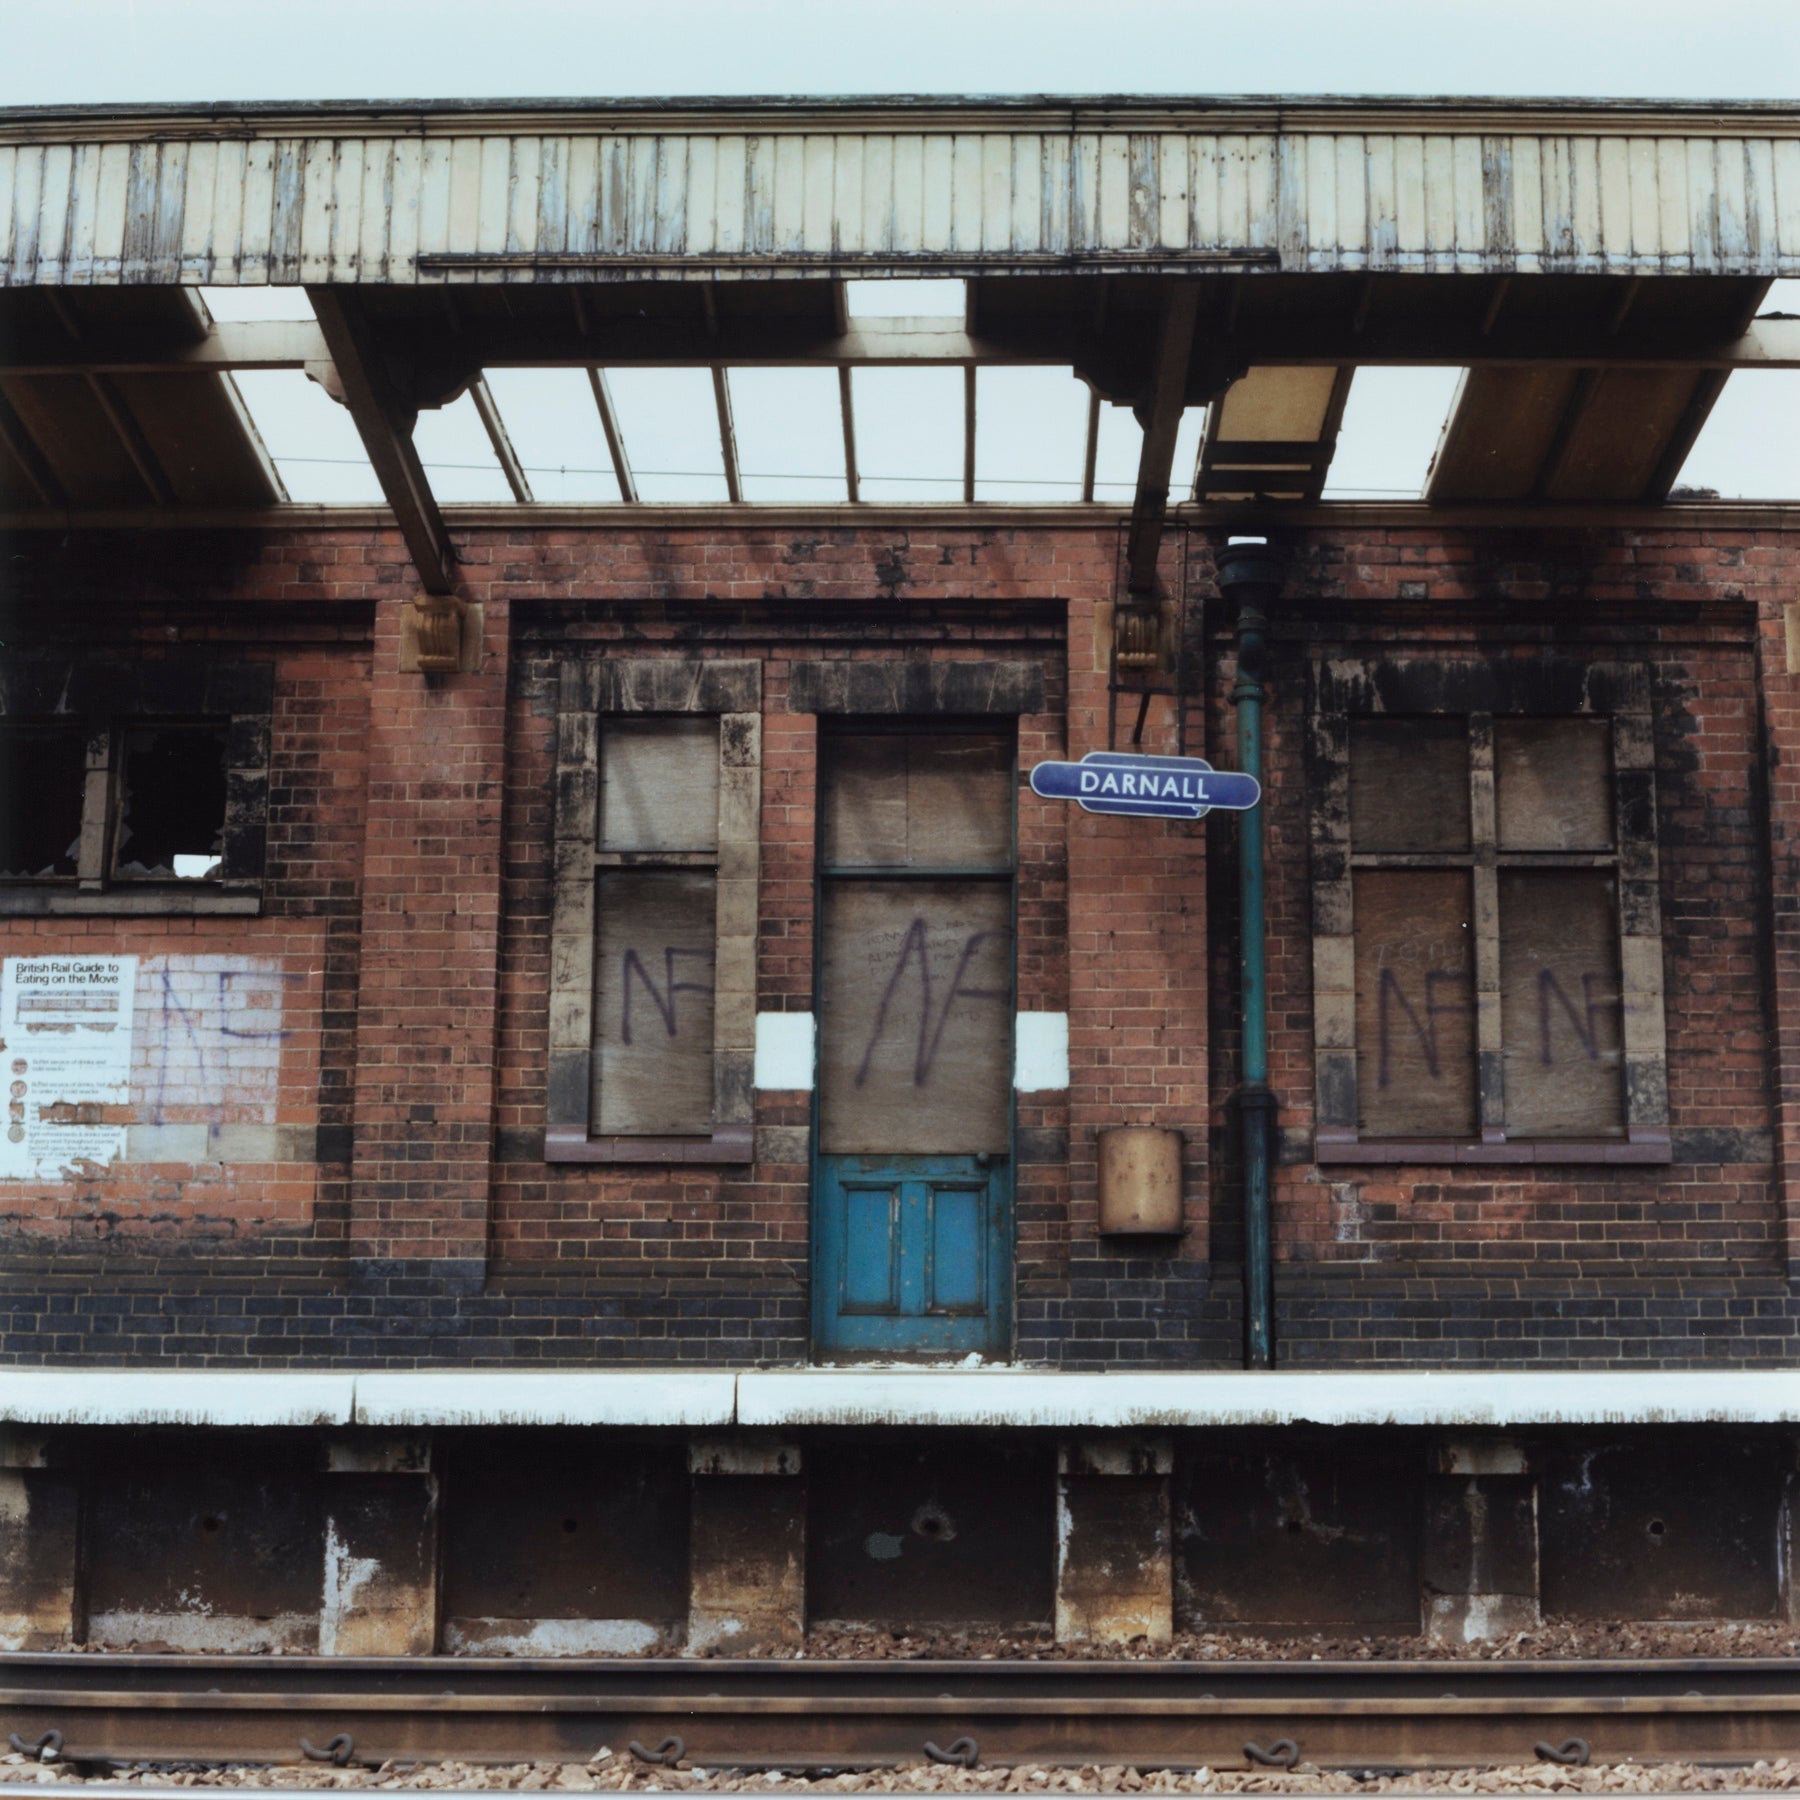 Darnall Station, Sheffield, 1978 - 7x9" Print